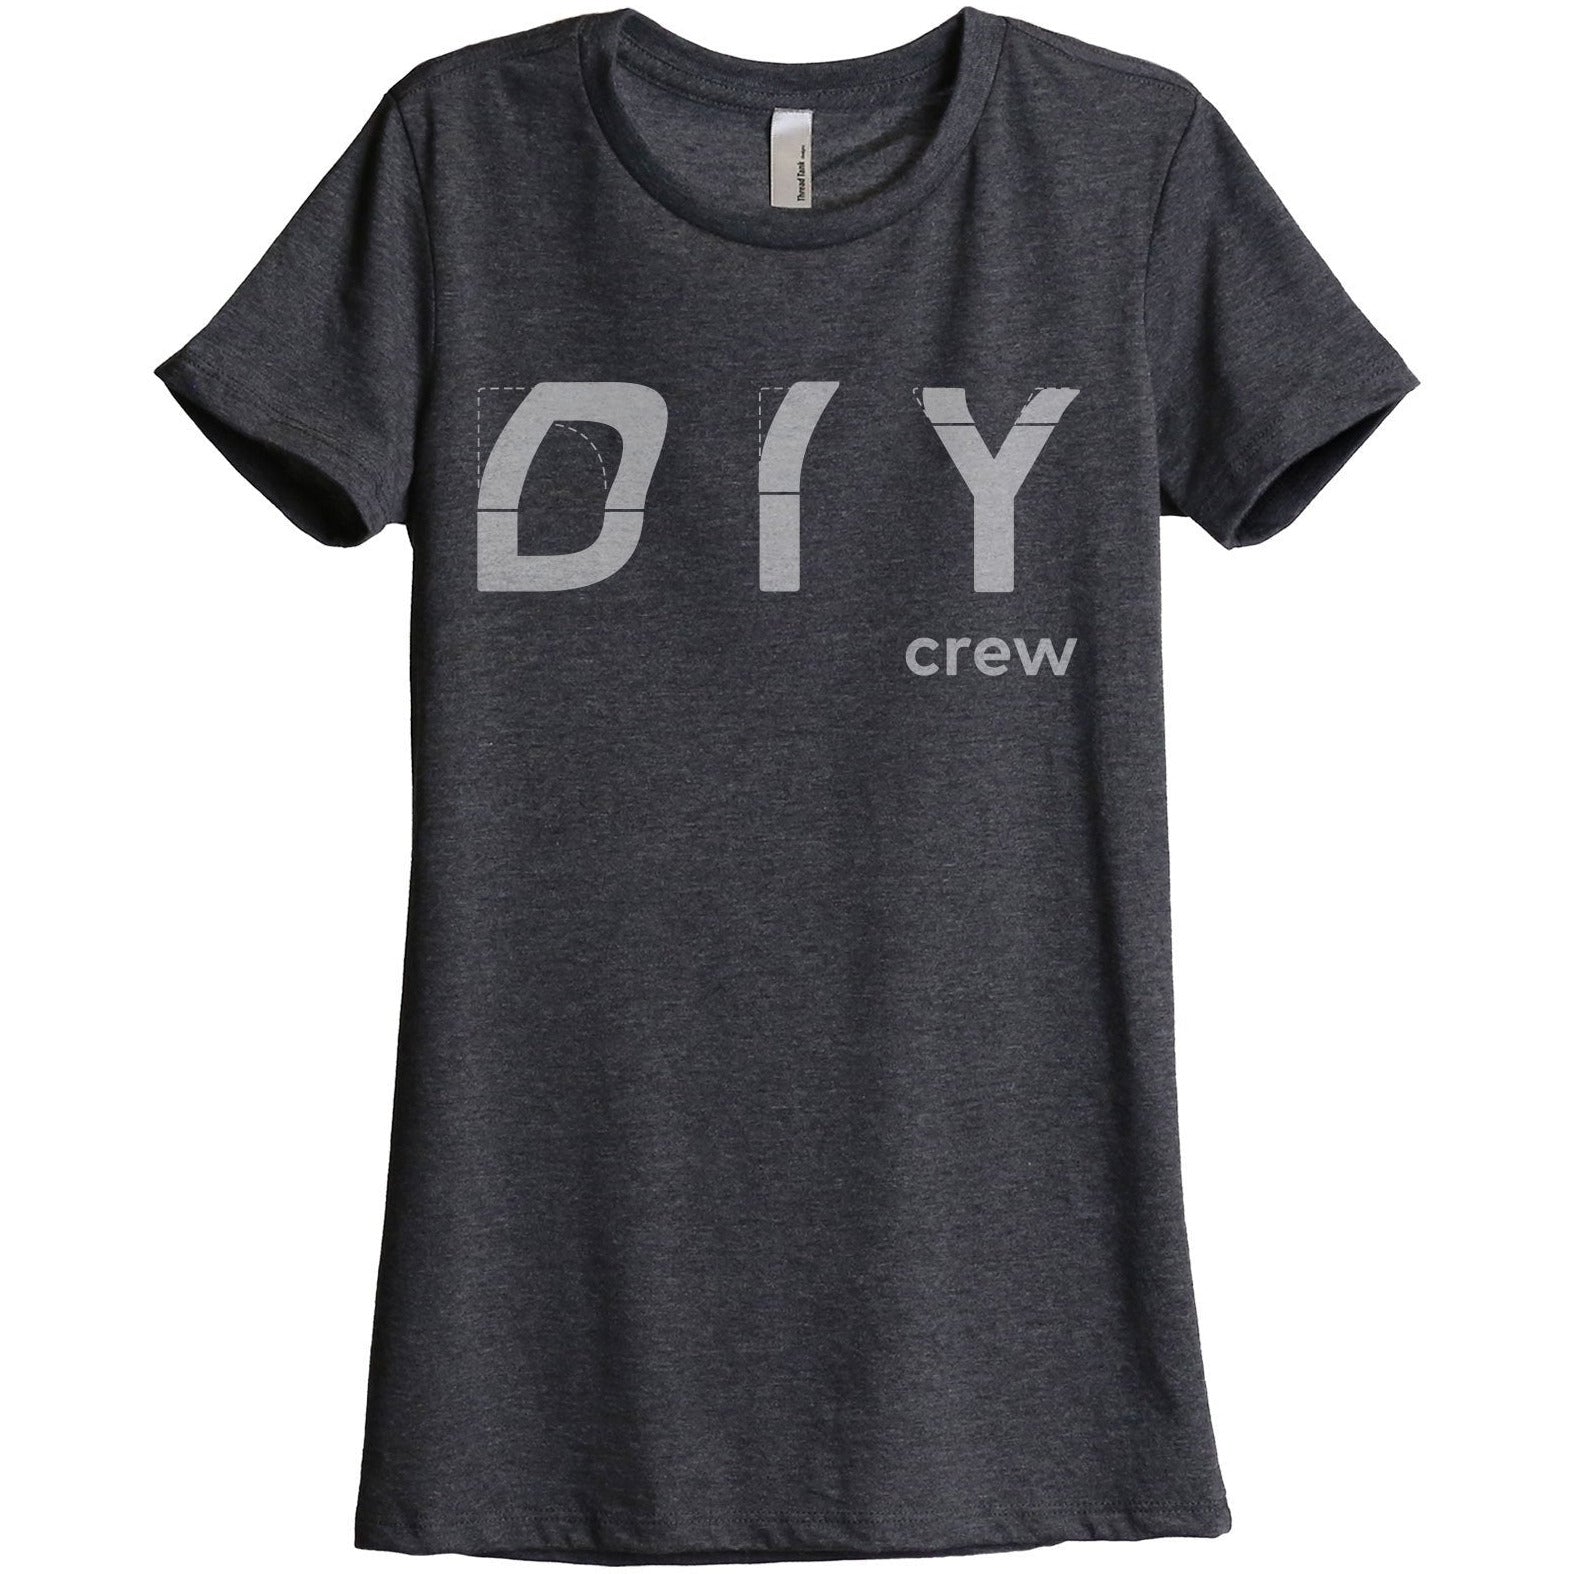 DIY Crew Women's Relaxed Crewneck T-Shirt Top Tee Charcoal Grey
